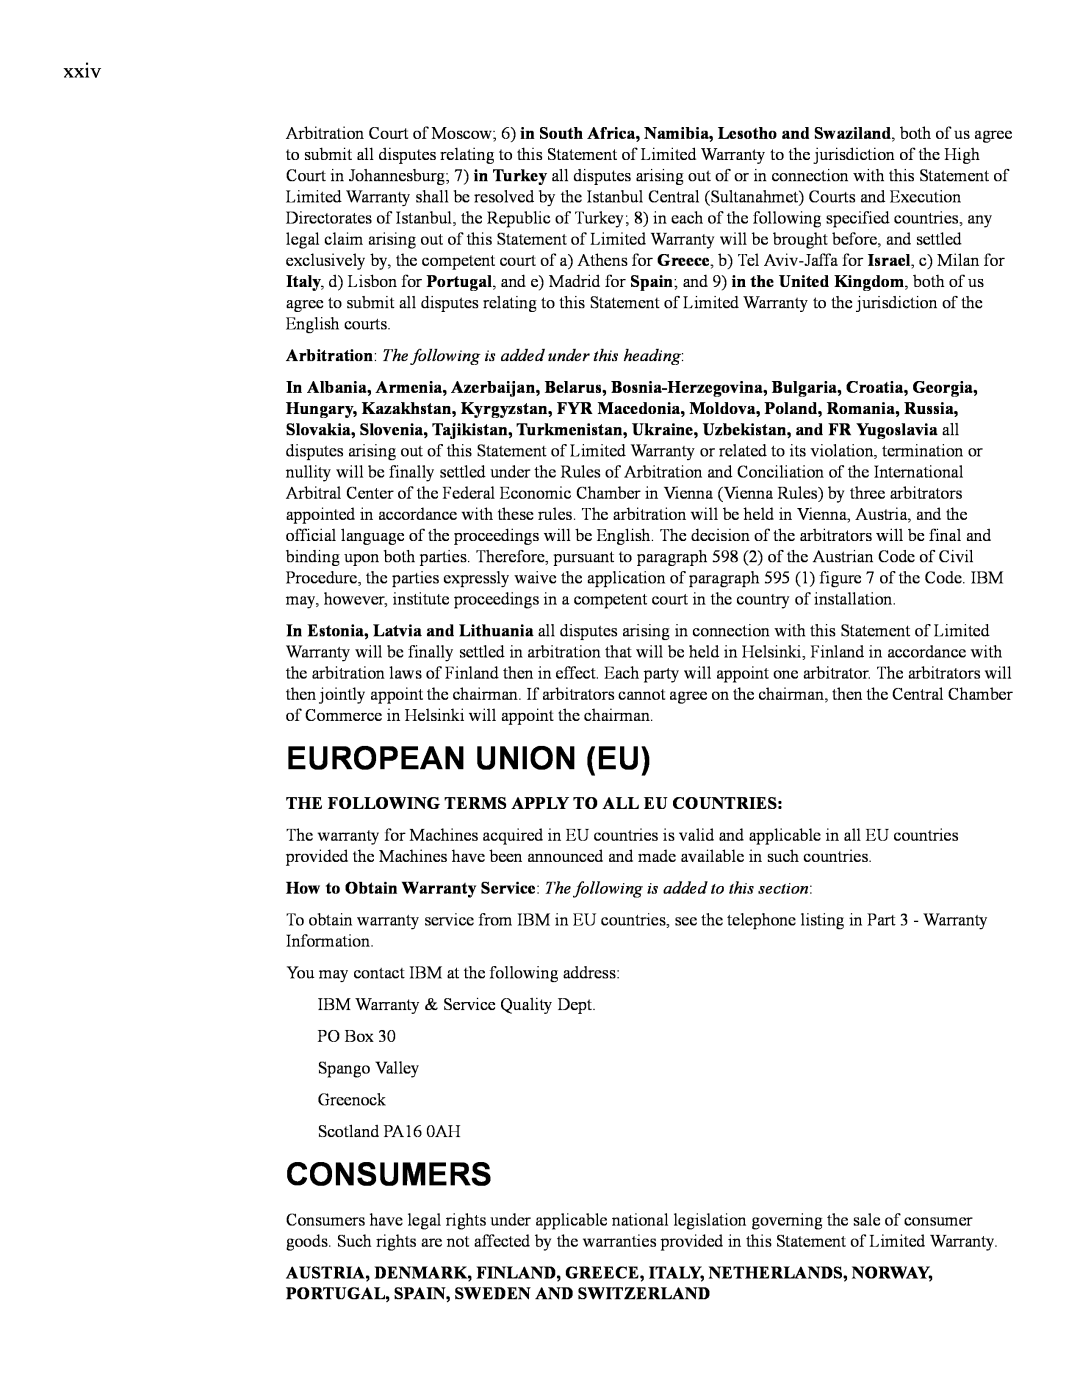 IBM 24R9718 IB manual European Union Eu, Consumers, The Following Terms Apply To All Eu Countries 